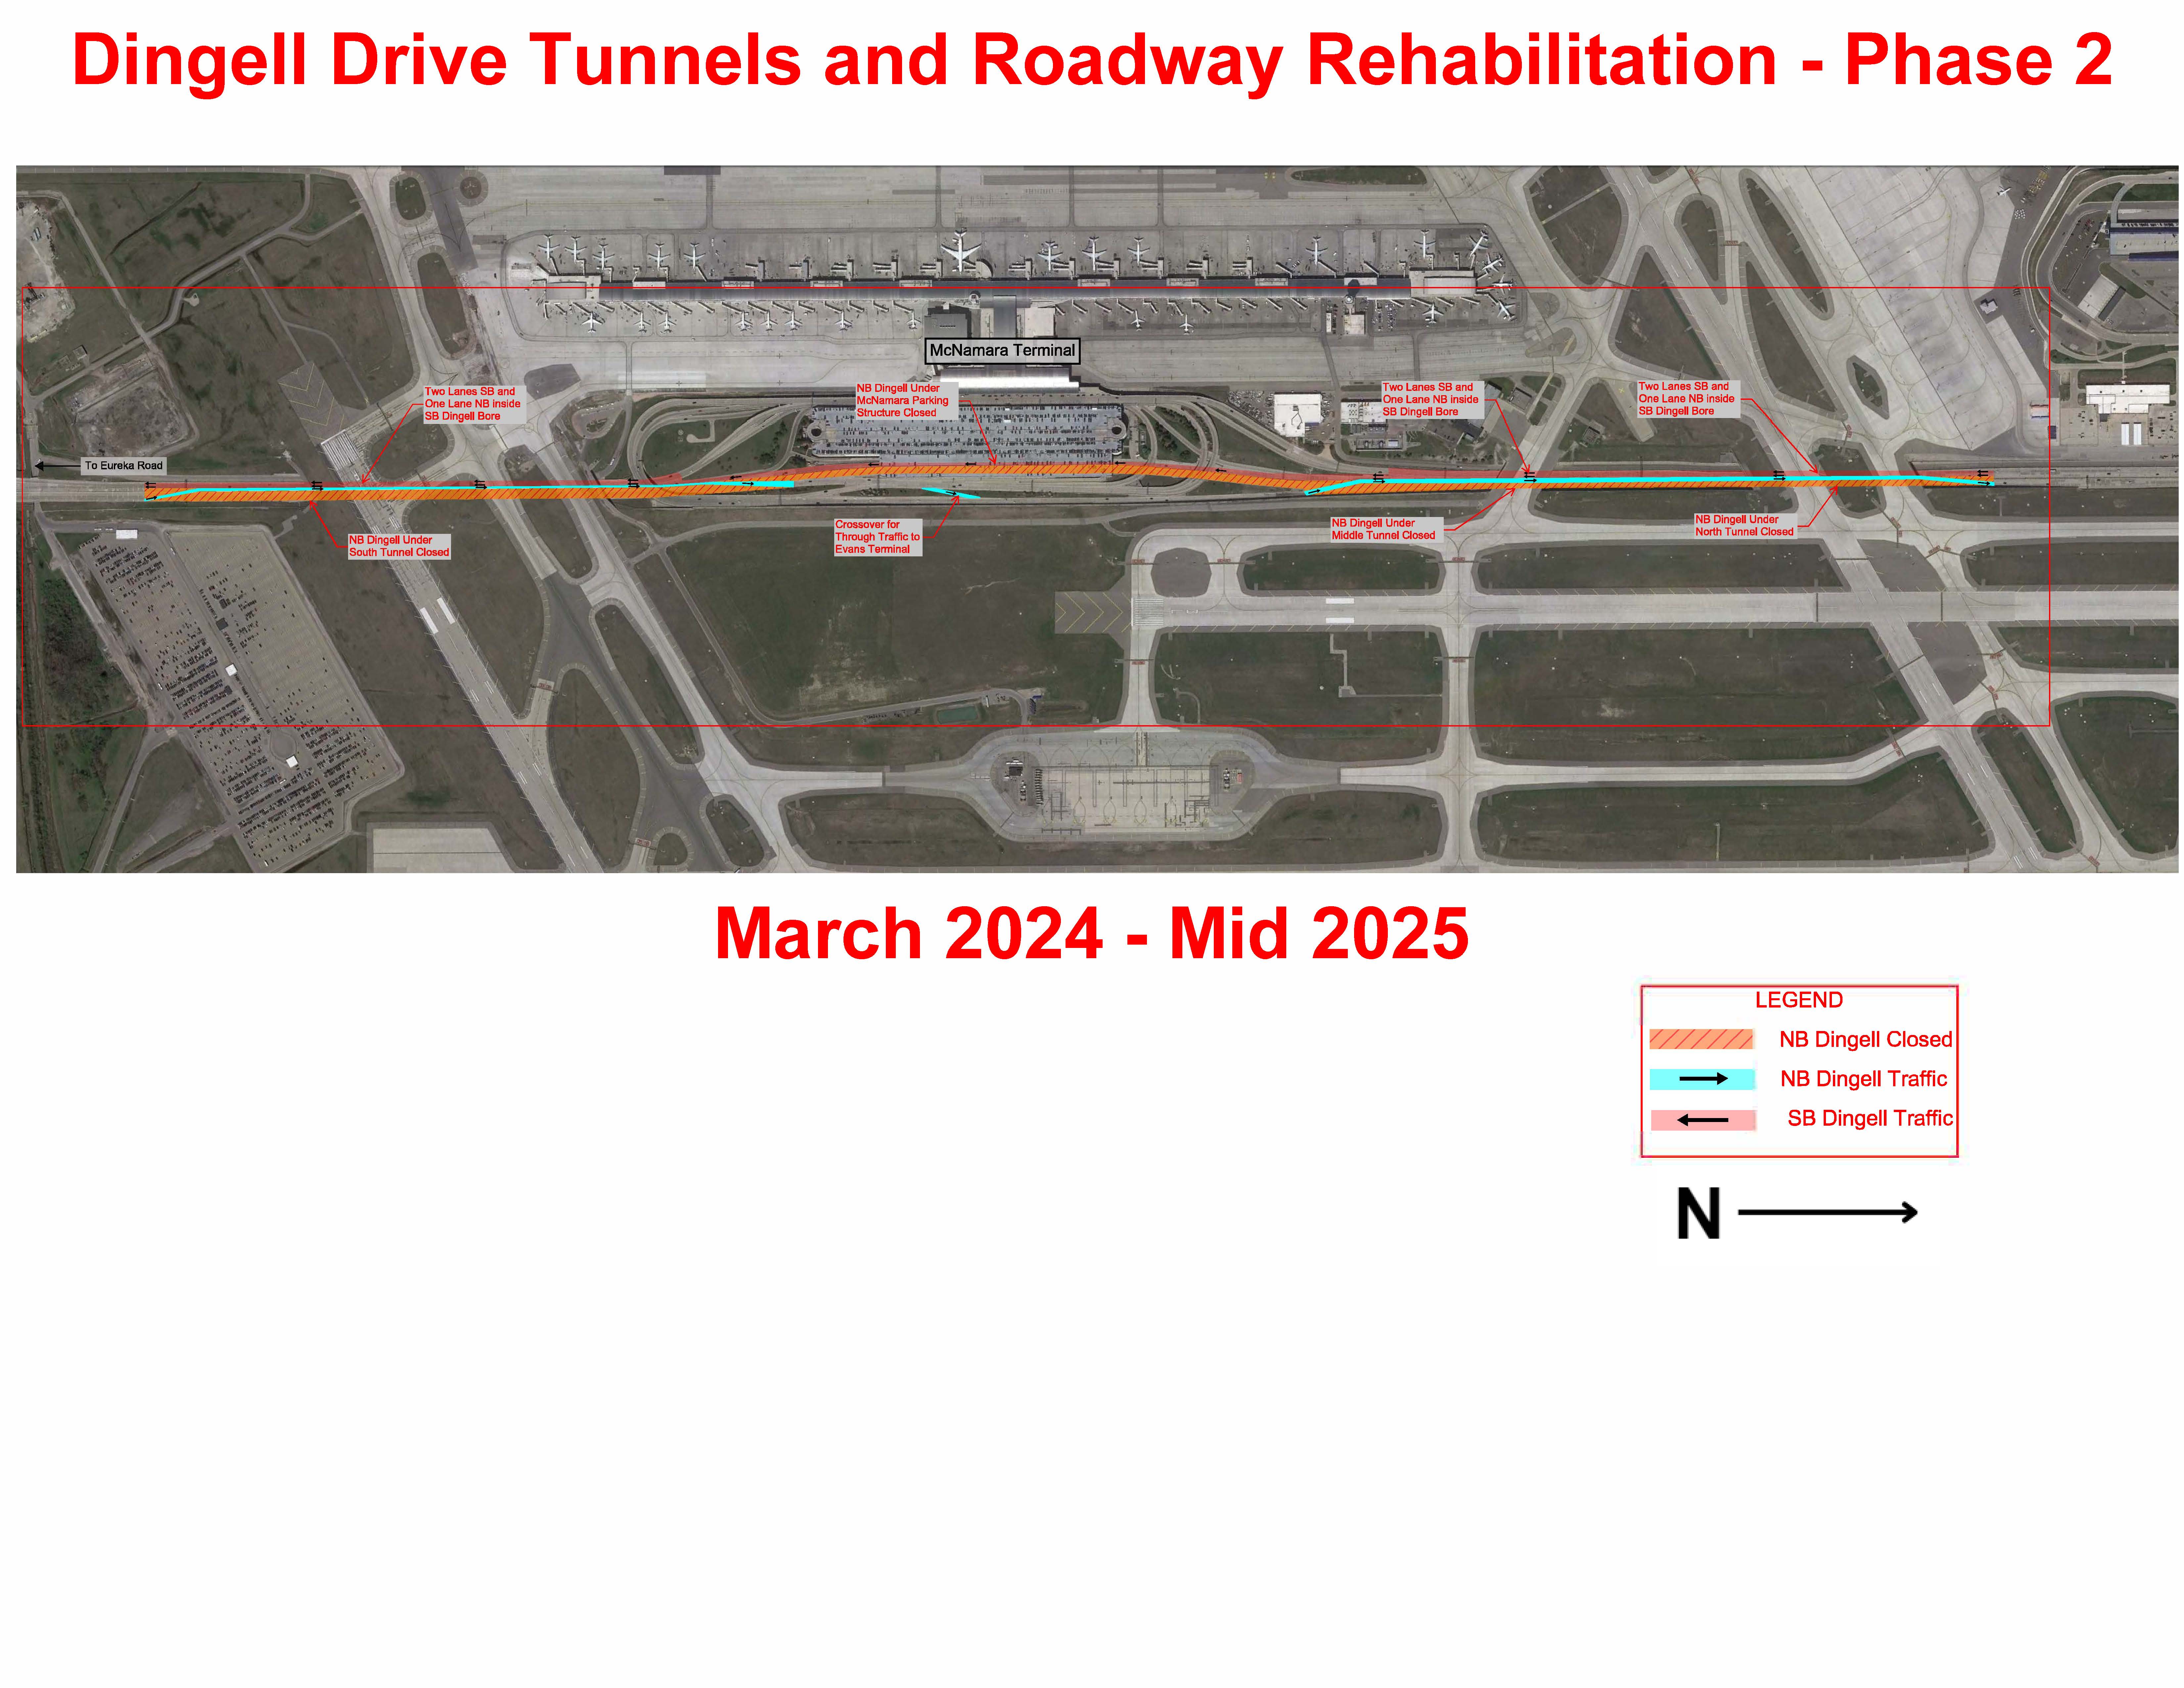 Dingell Drive Rehabilitation March 2024 - Mid 2025